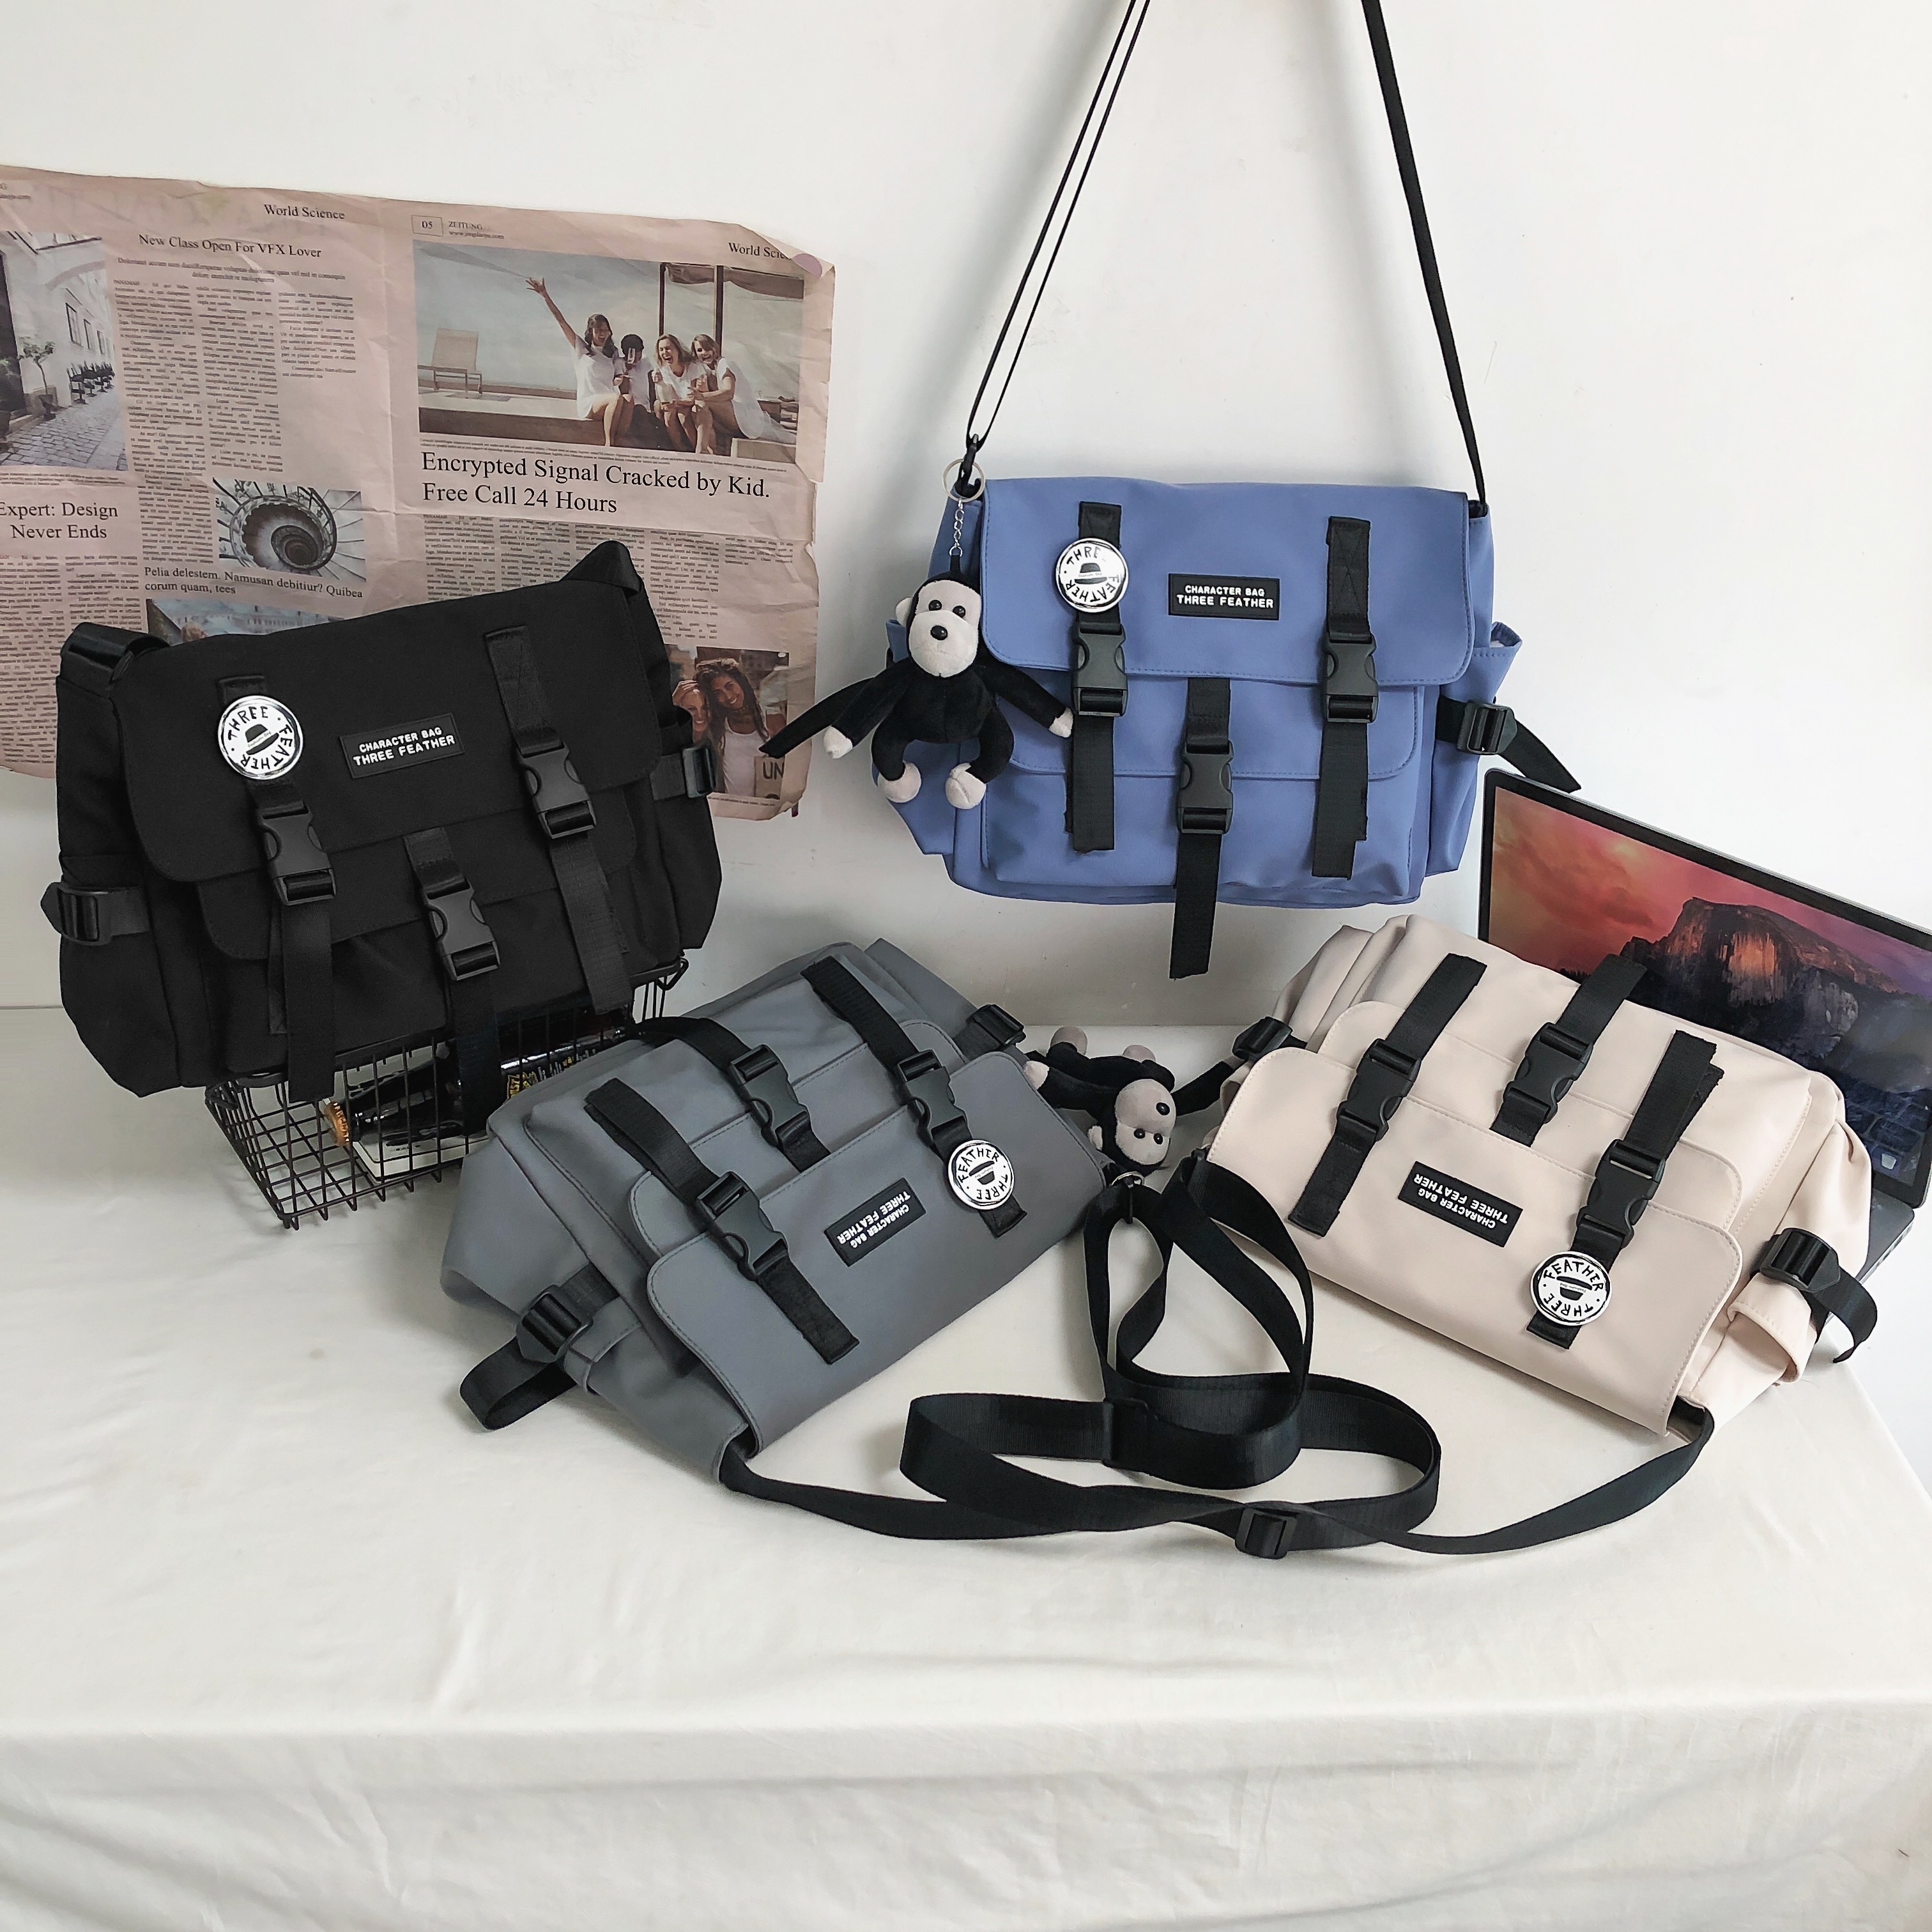 Designer Protective Laptop Bags Fashionable Blue Messenger Travel